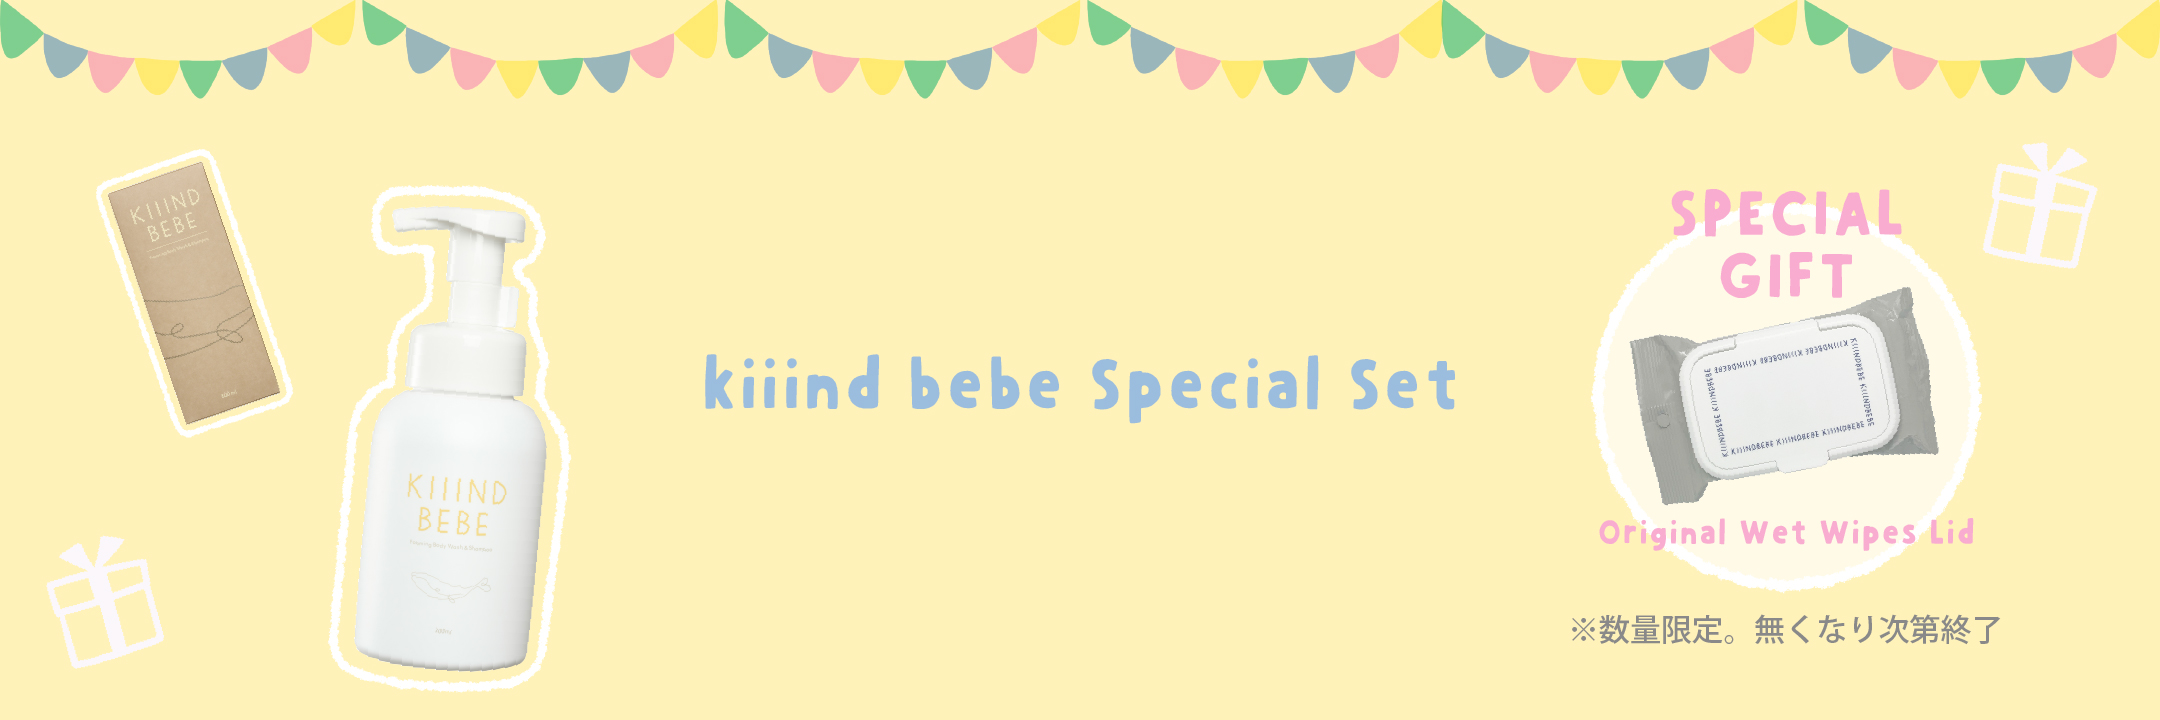 kiiind-bebe-Special-Set-サイトPC